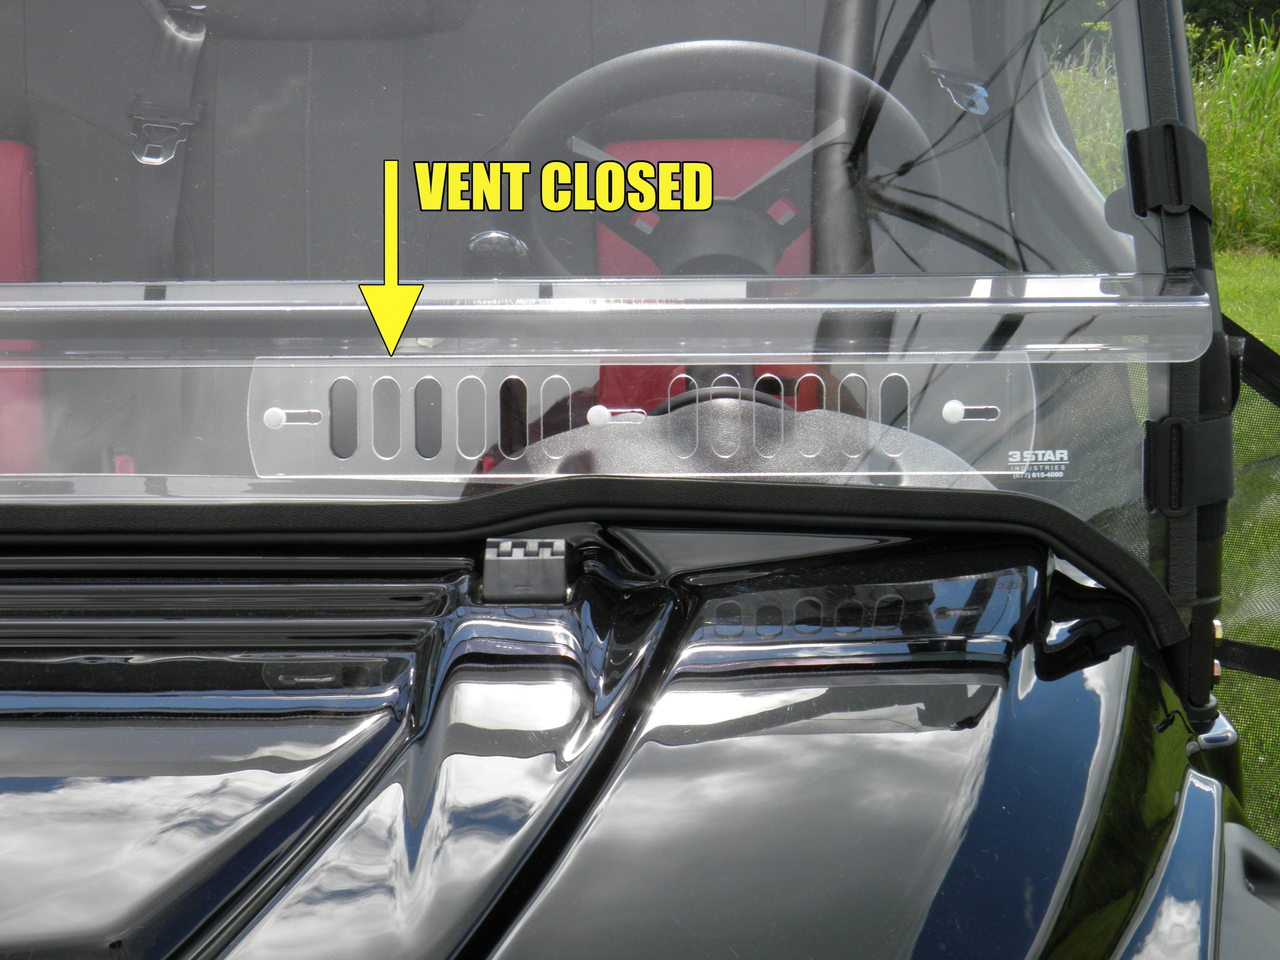 3 Star side x side CF Moto U-Force 500/800 windshield vents closed